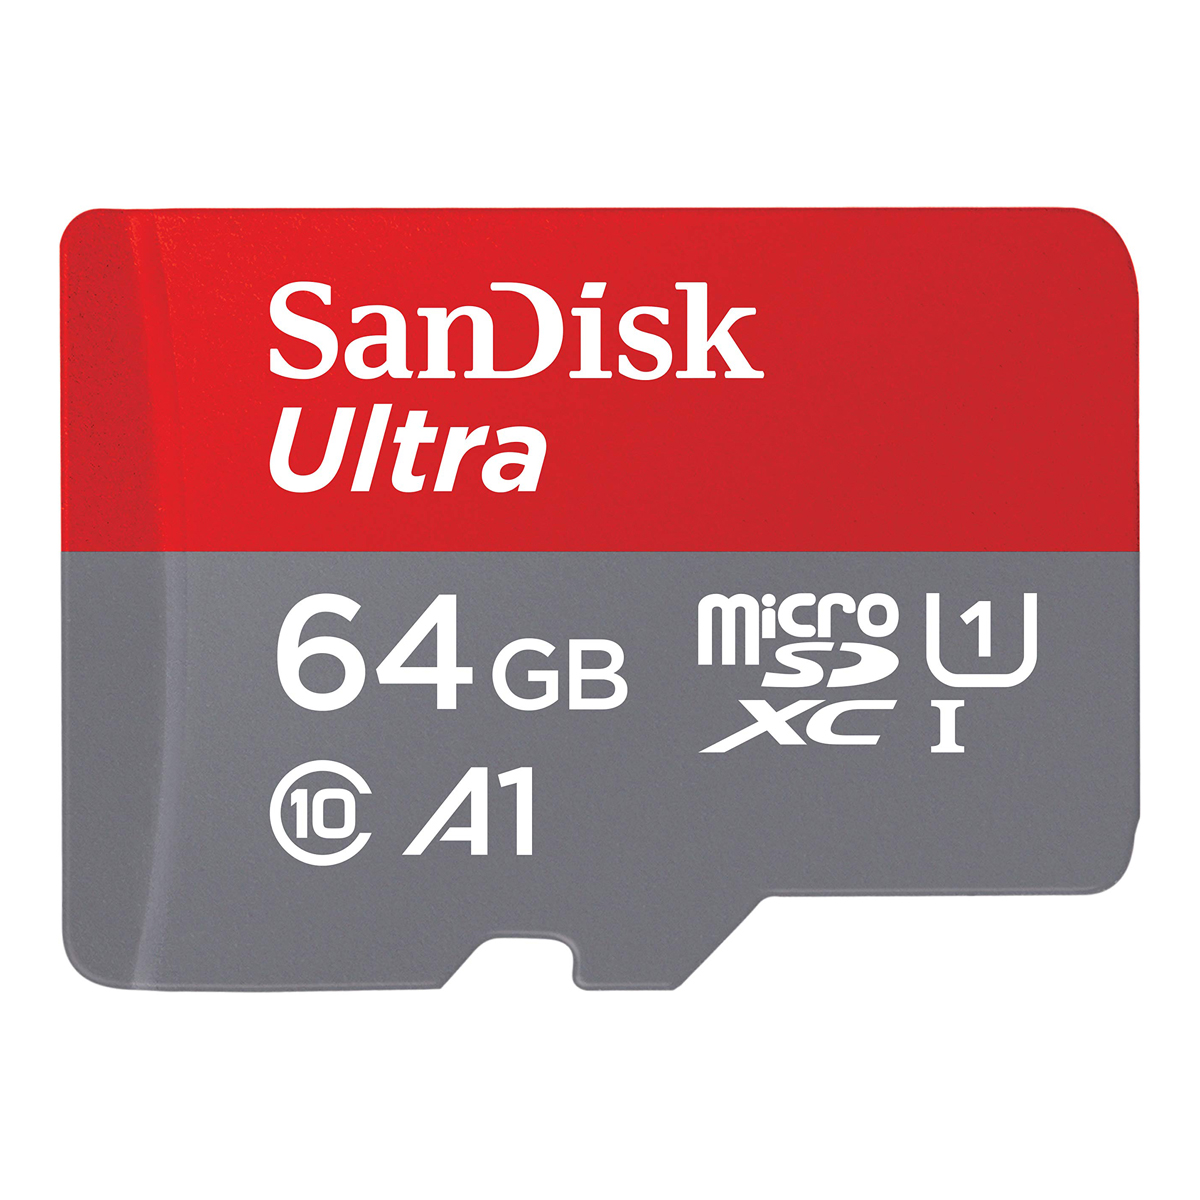 RAM 64GB MICRO SD FLASH CARD SANDISK 120MB CLASS 10, Flash Card